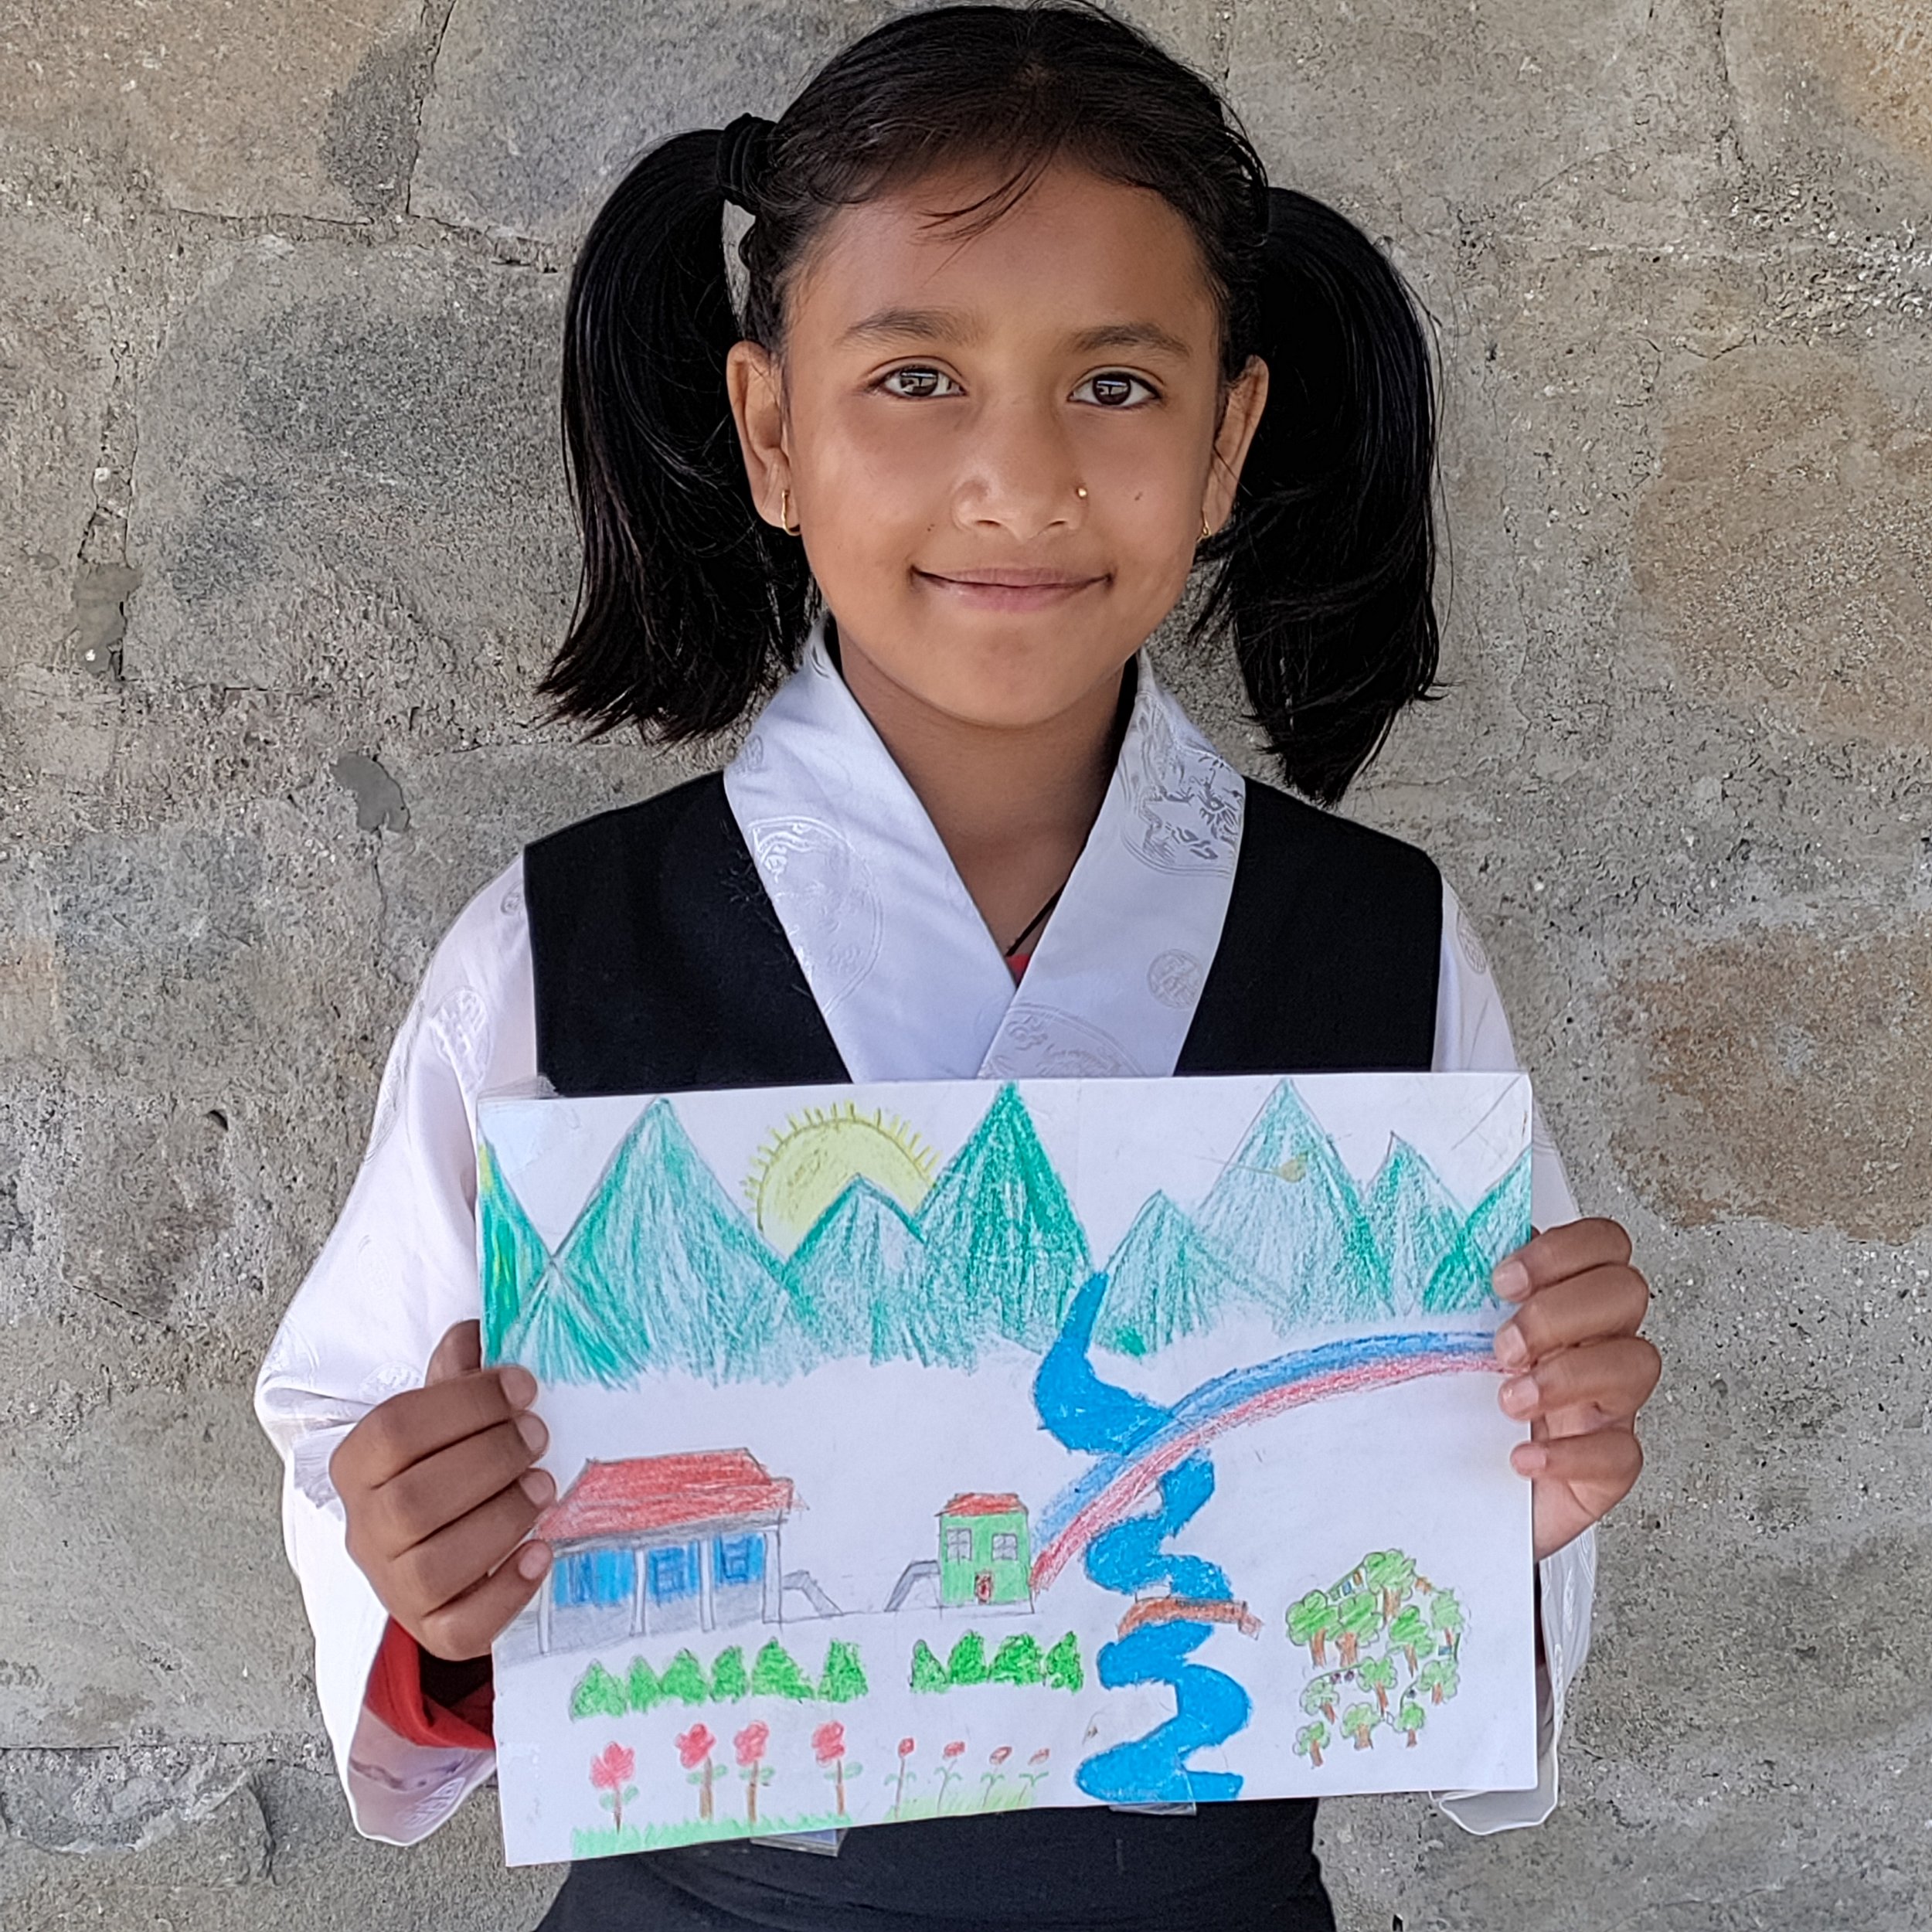  Barsa with her winning artwork